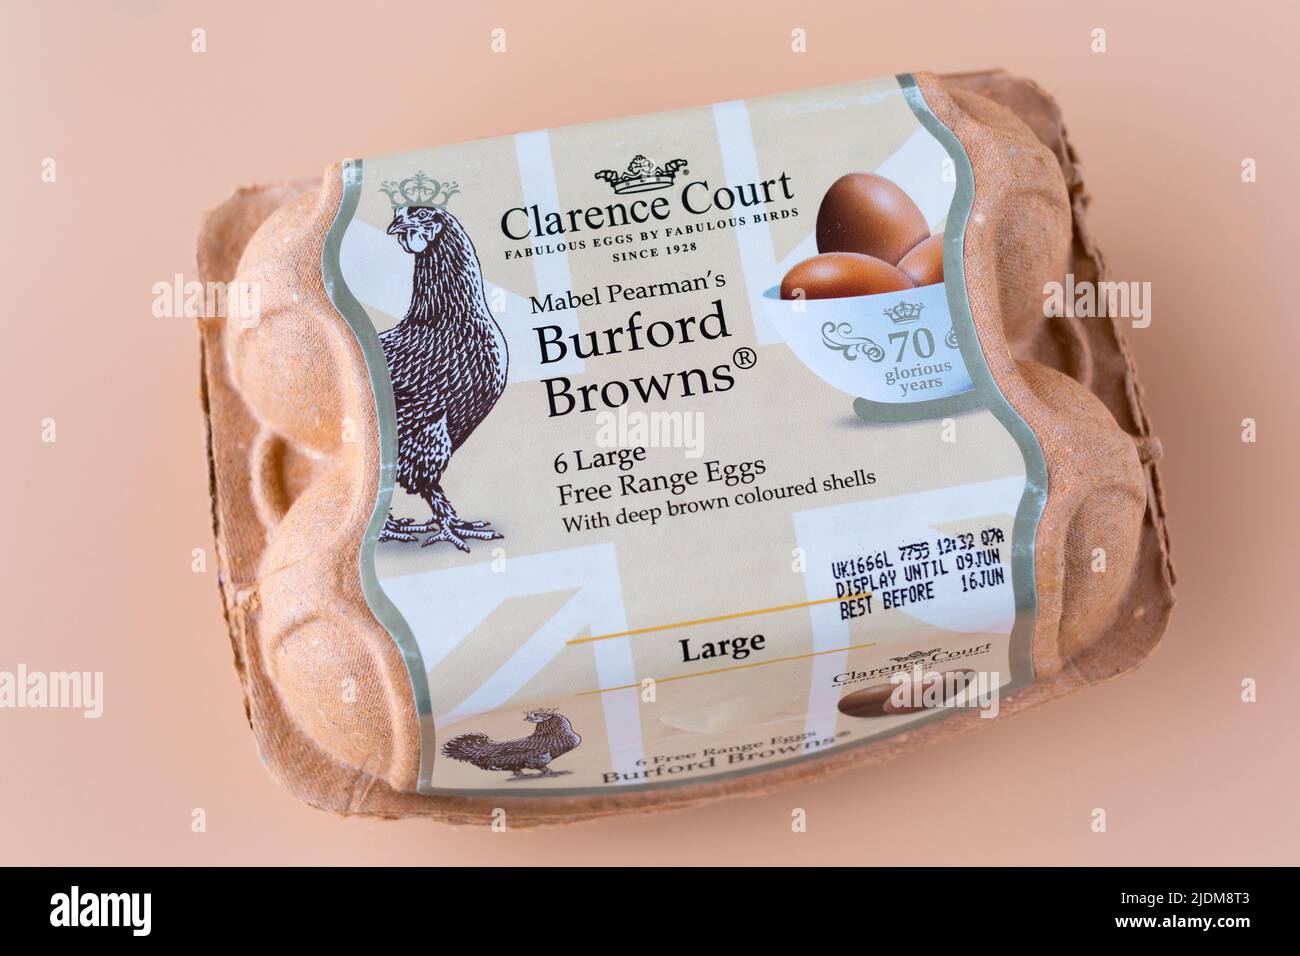 Box/carton of Clarence Court Burford Browns large free range eggs Stock Photo